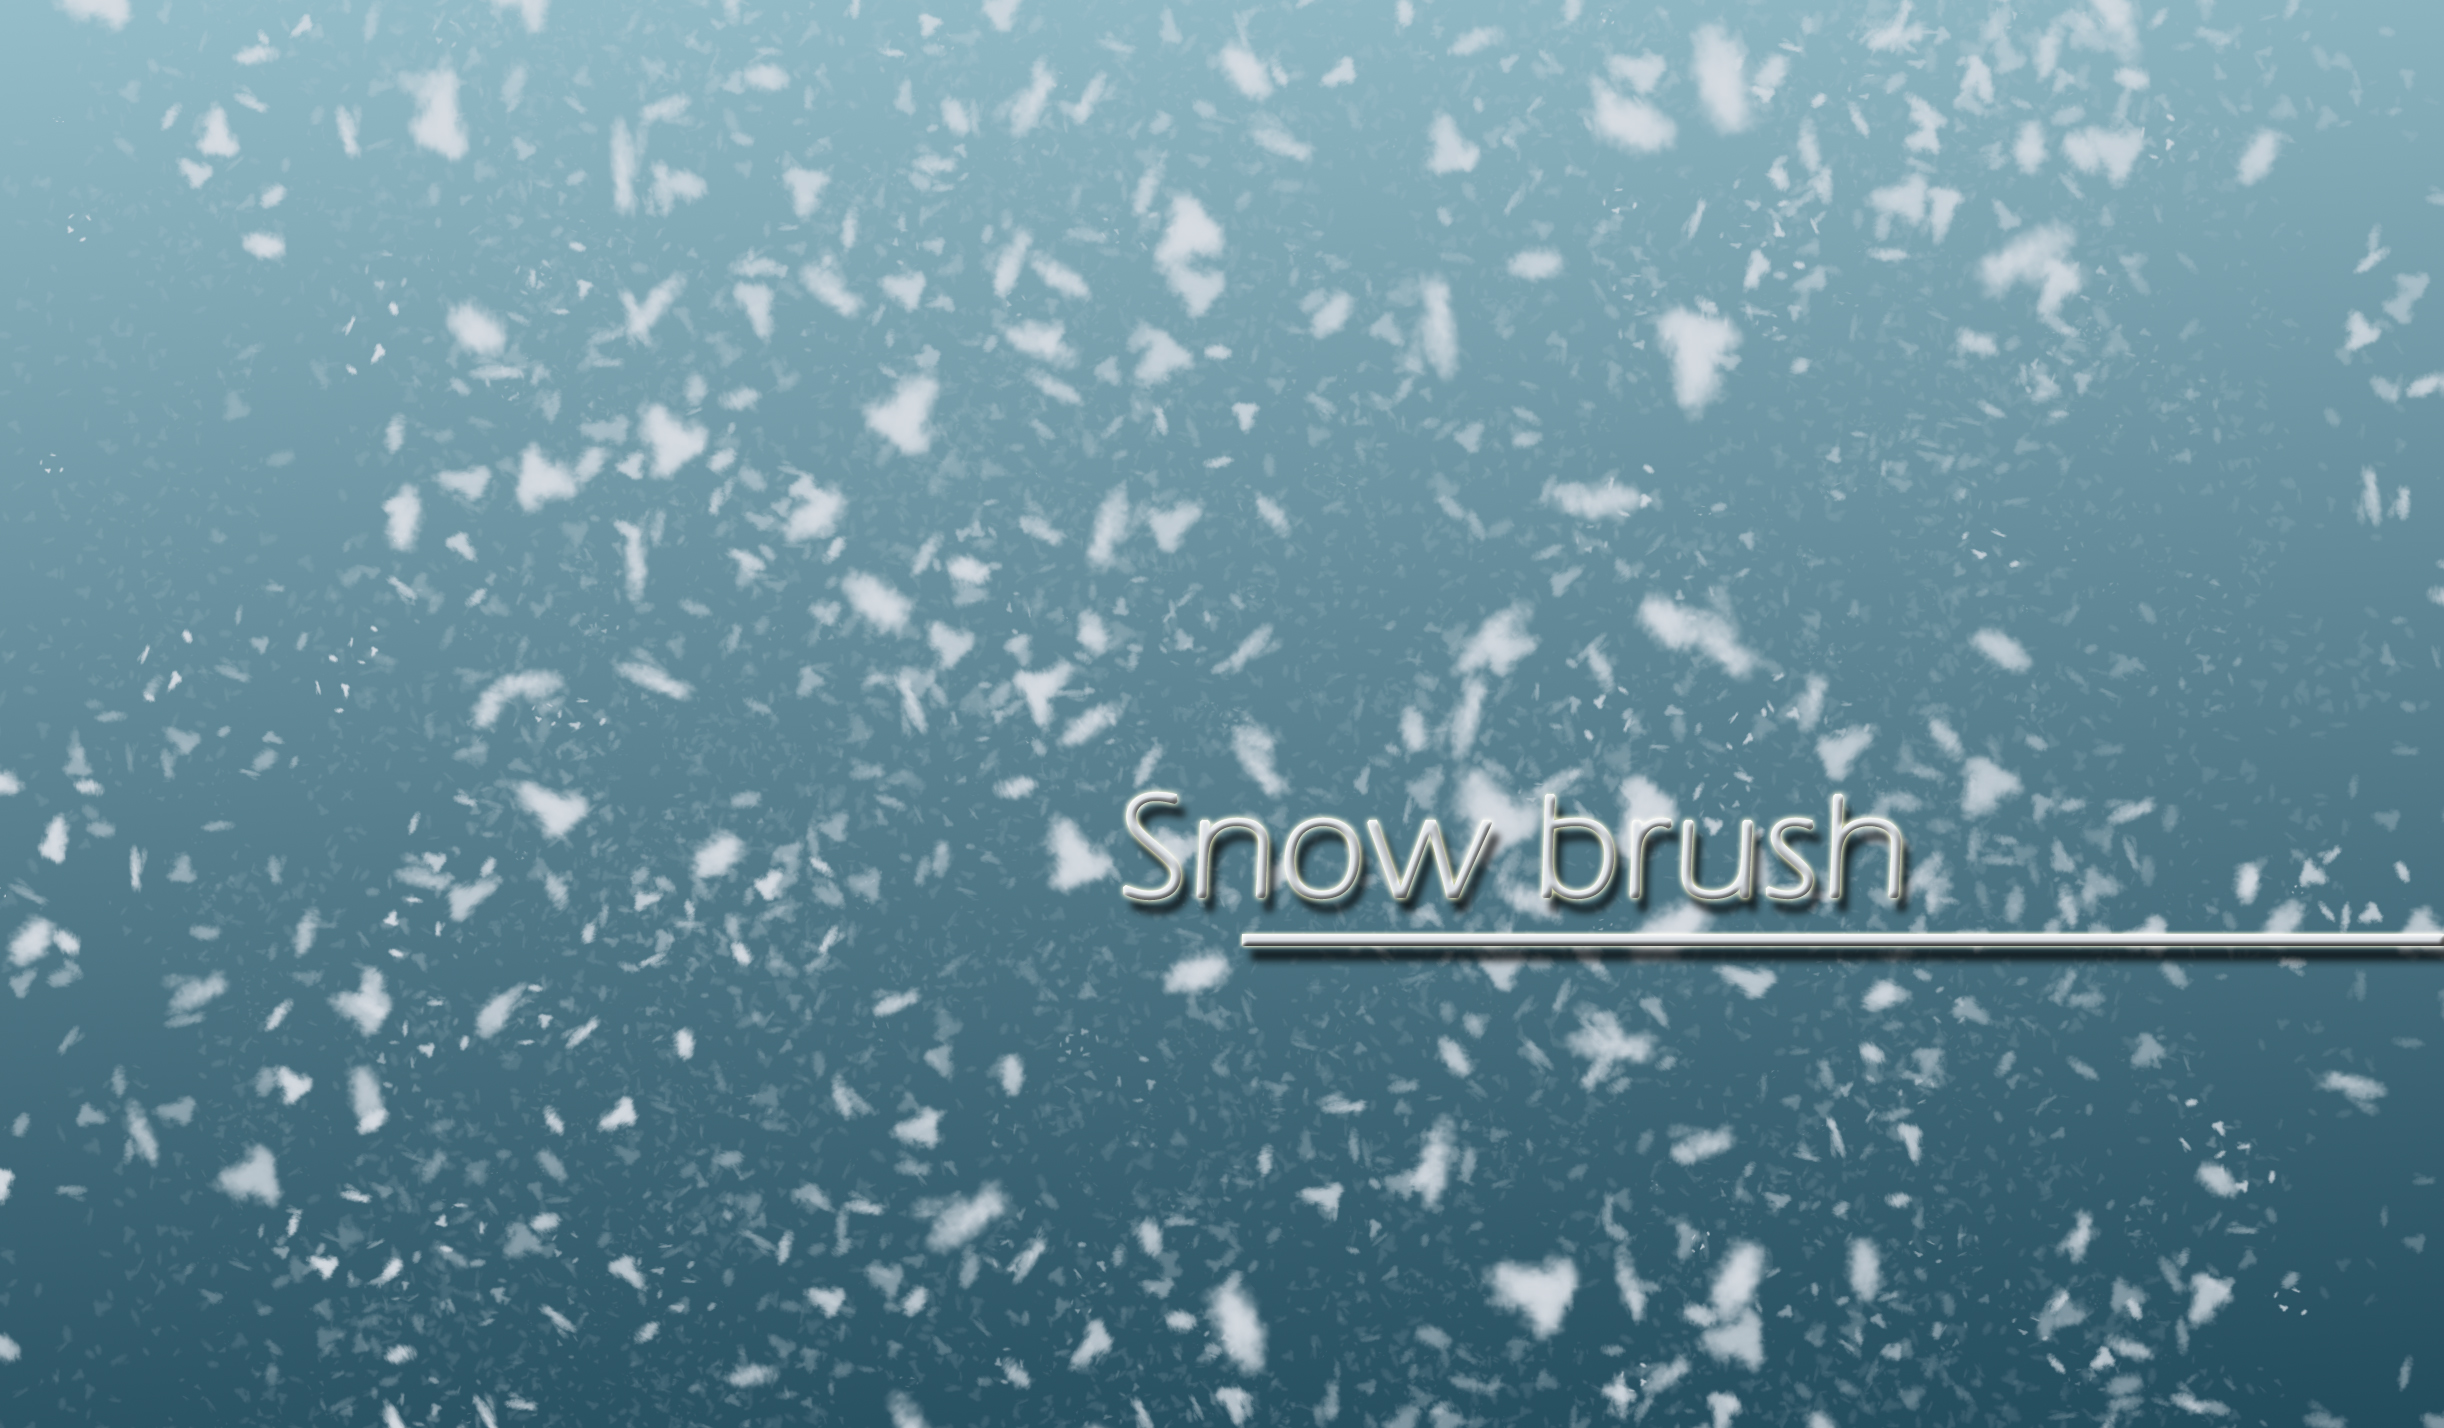 Snow brush